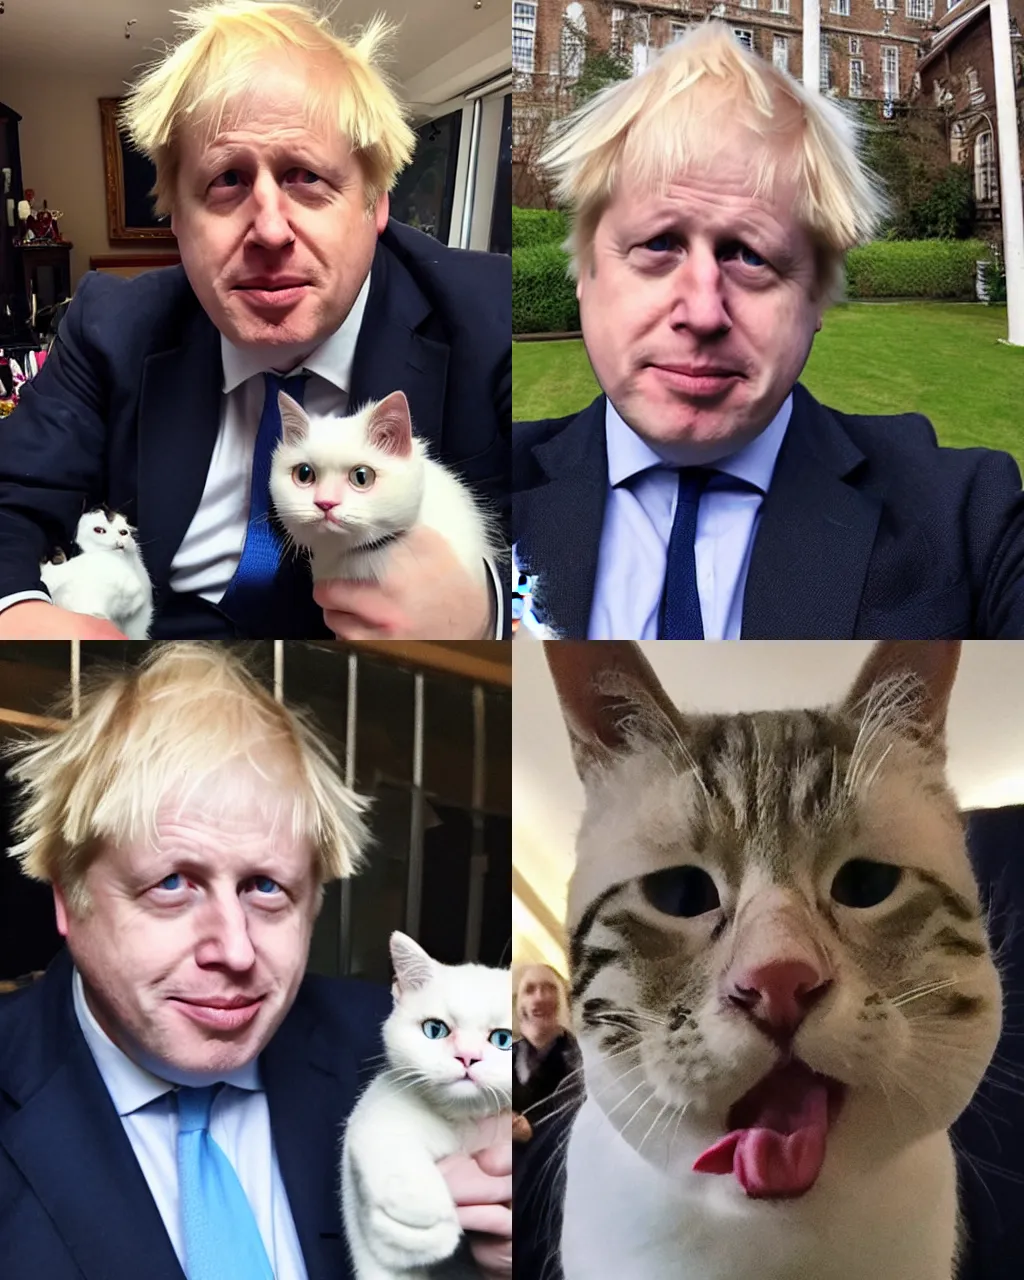 Prompt: boris johnson using a cute cat filter on snapchat, selfie video